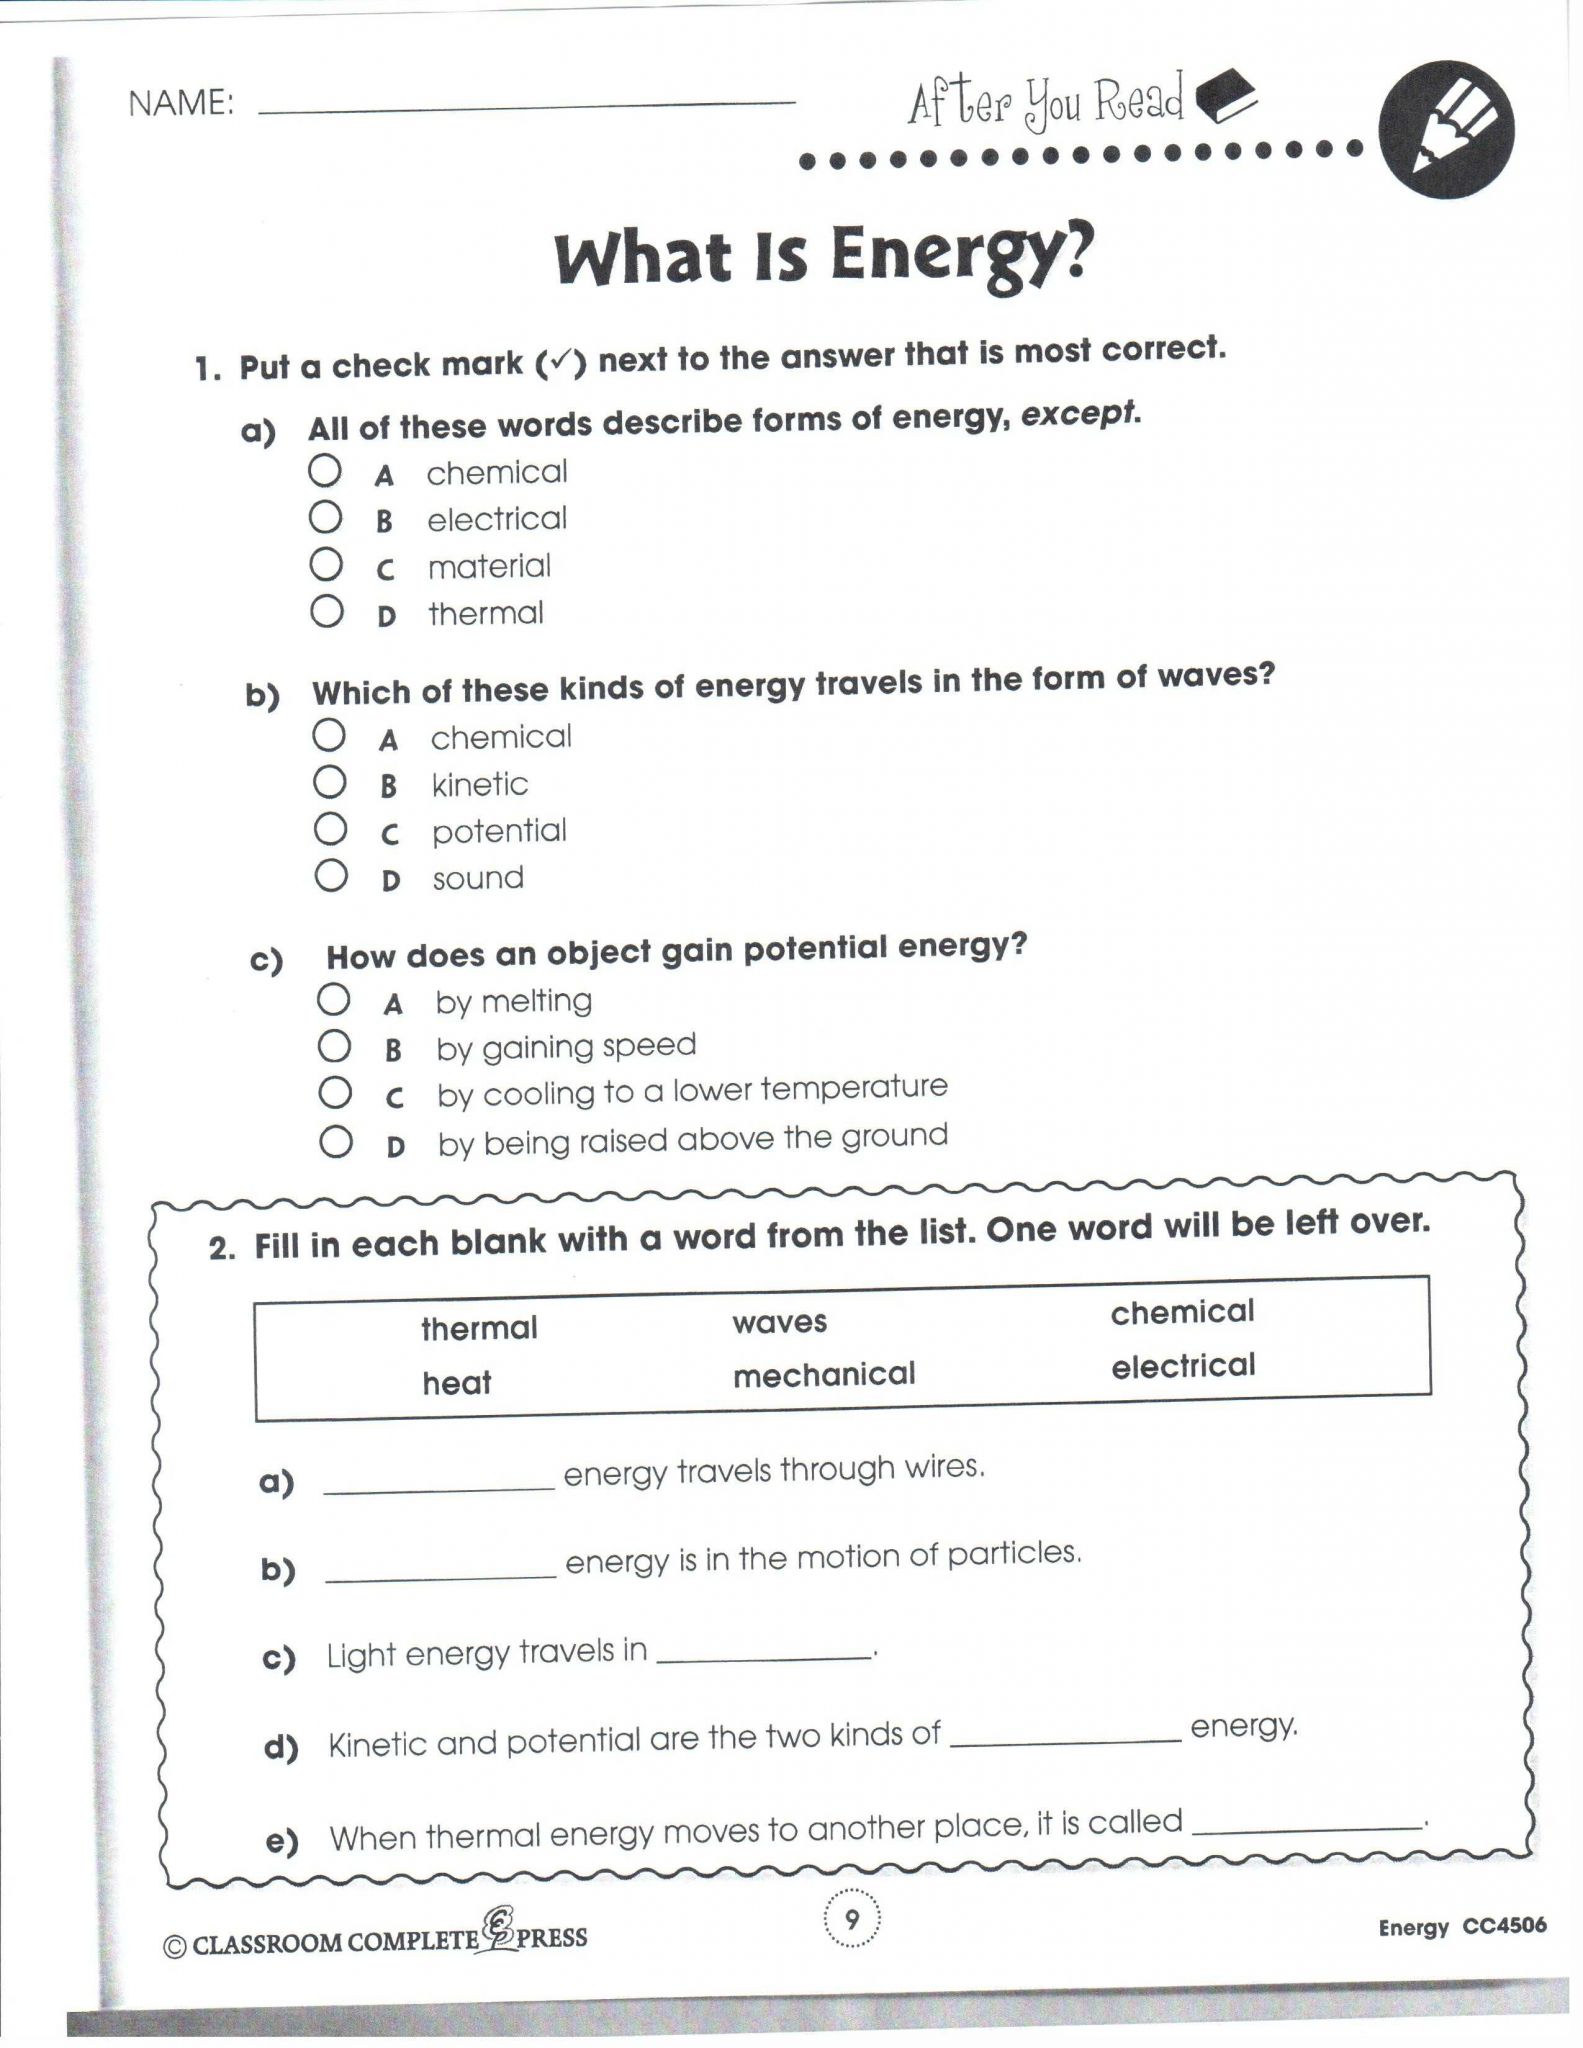 Free Homeschool Printable Worksheets Also Free Middle School Worksheets Others Free Worksheet Daily